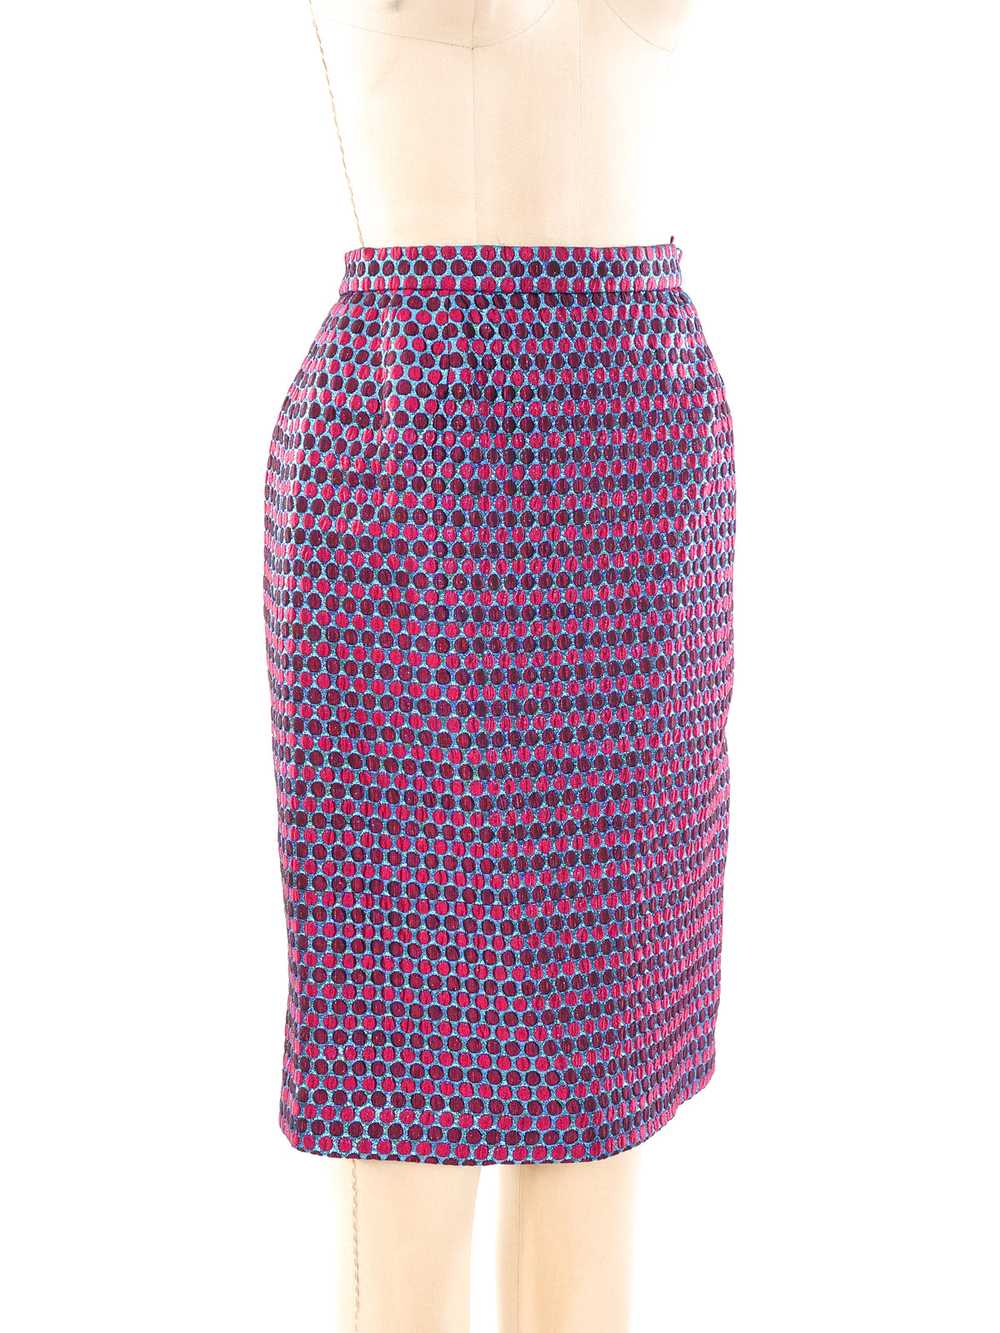 Galanos Tailored Iridescent Brocade Skirt Suit - image 6